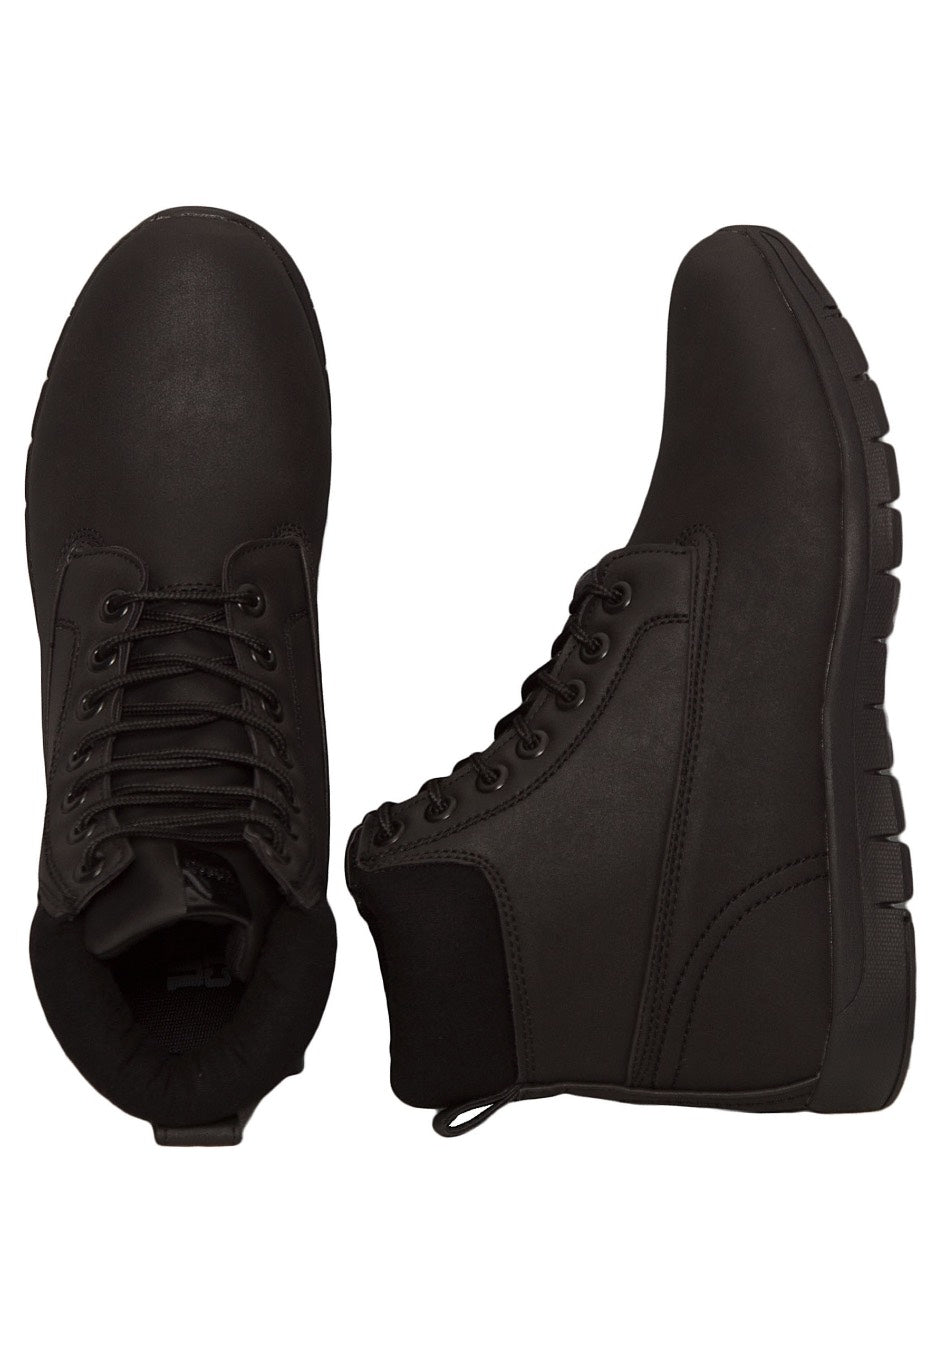 Urban Classics - Runner Boots Black/Black/Black - Shoes